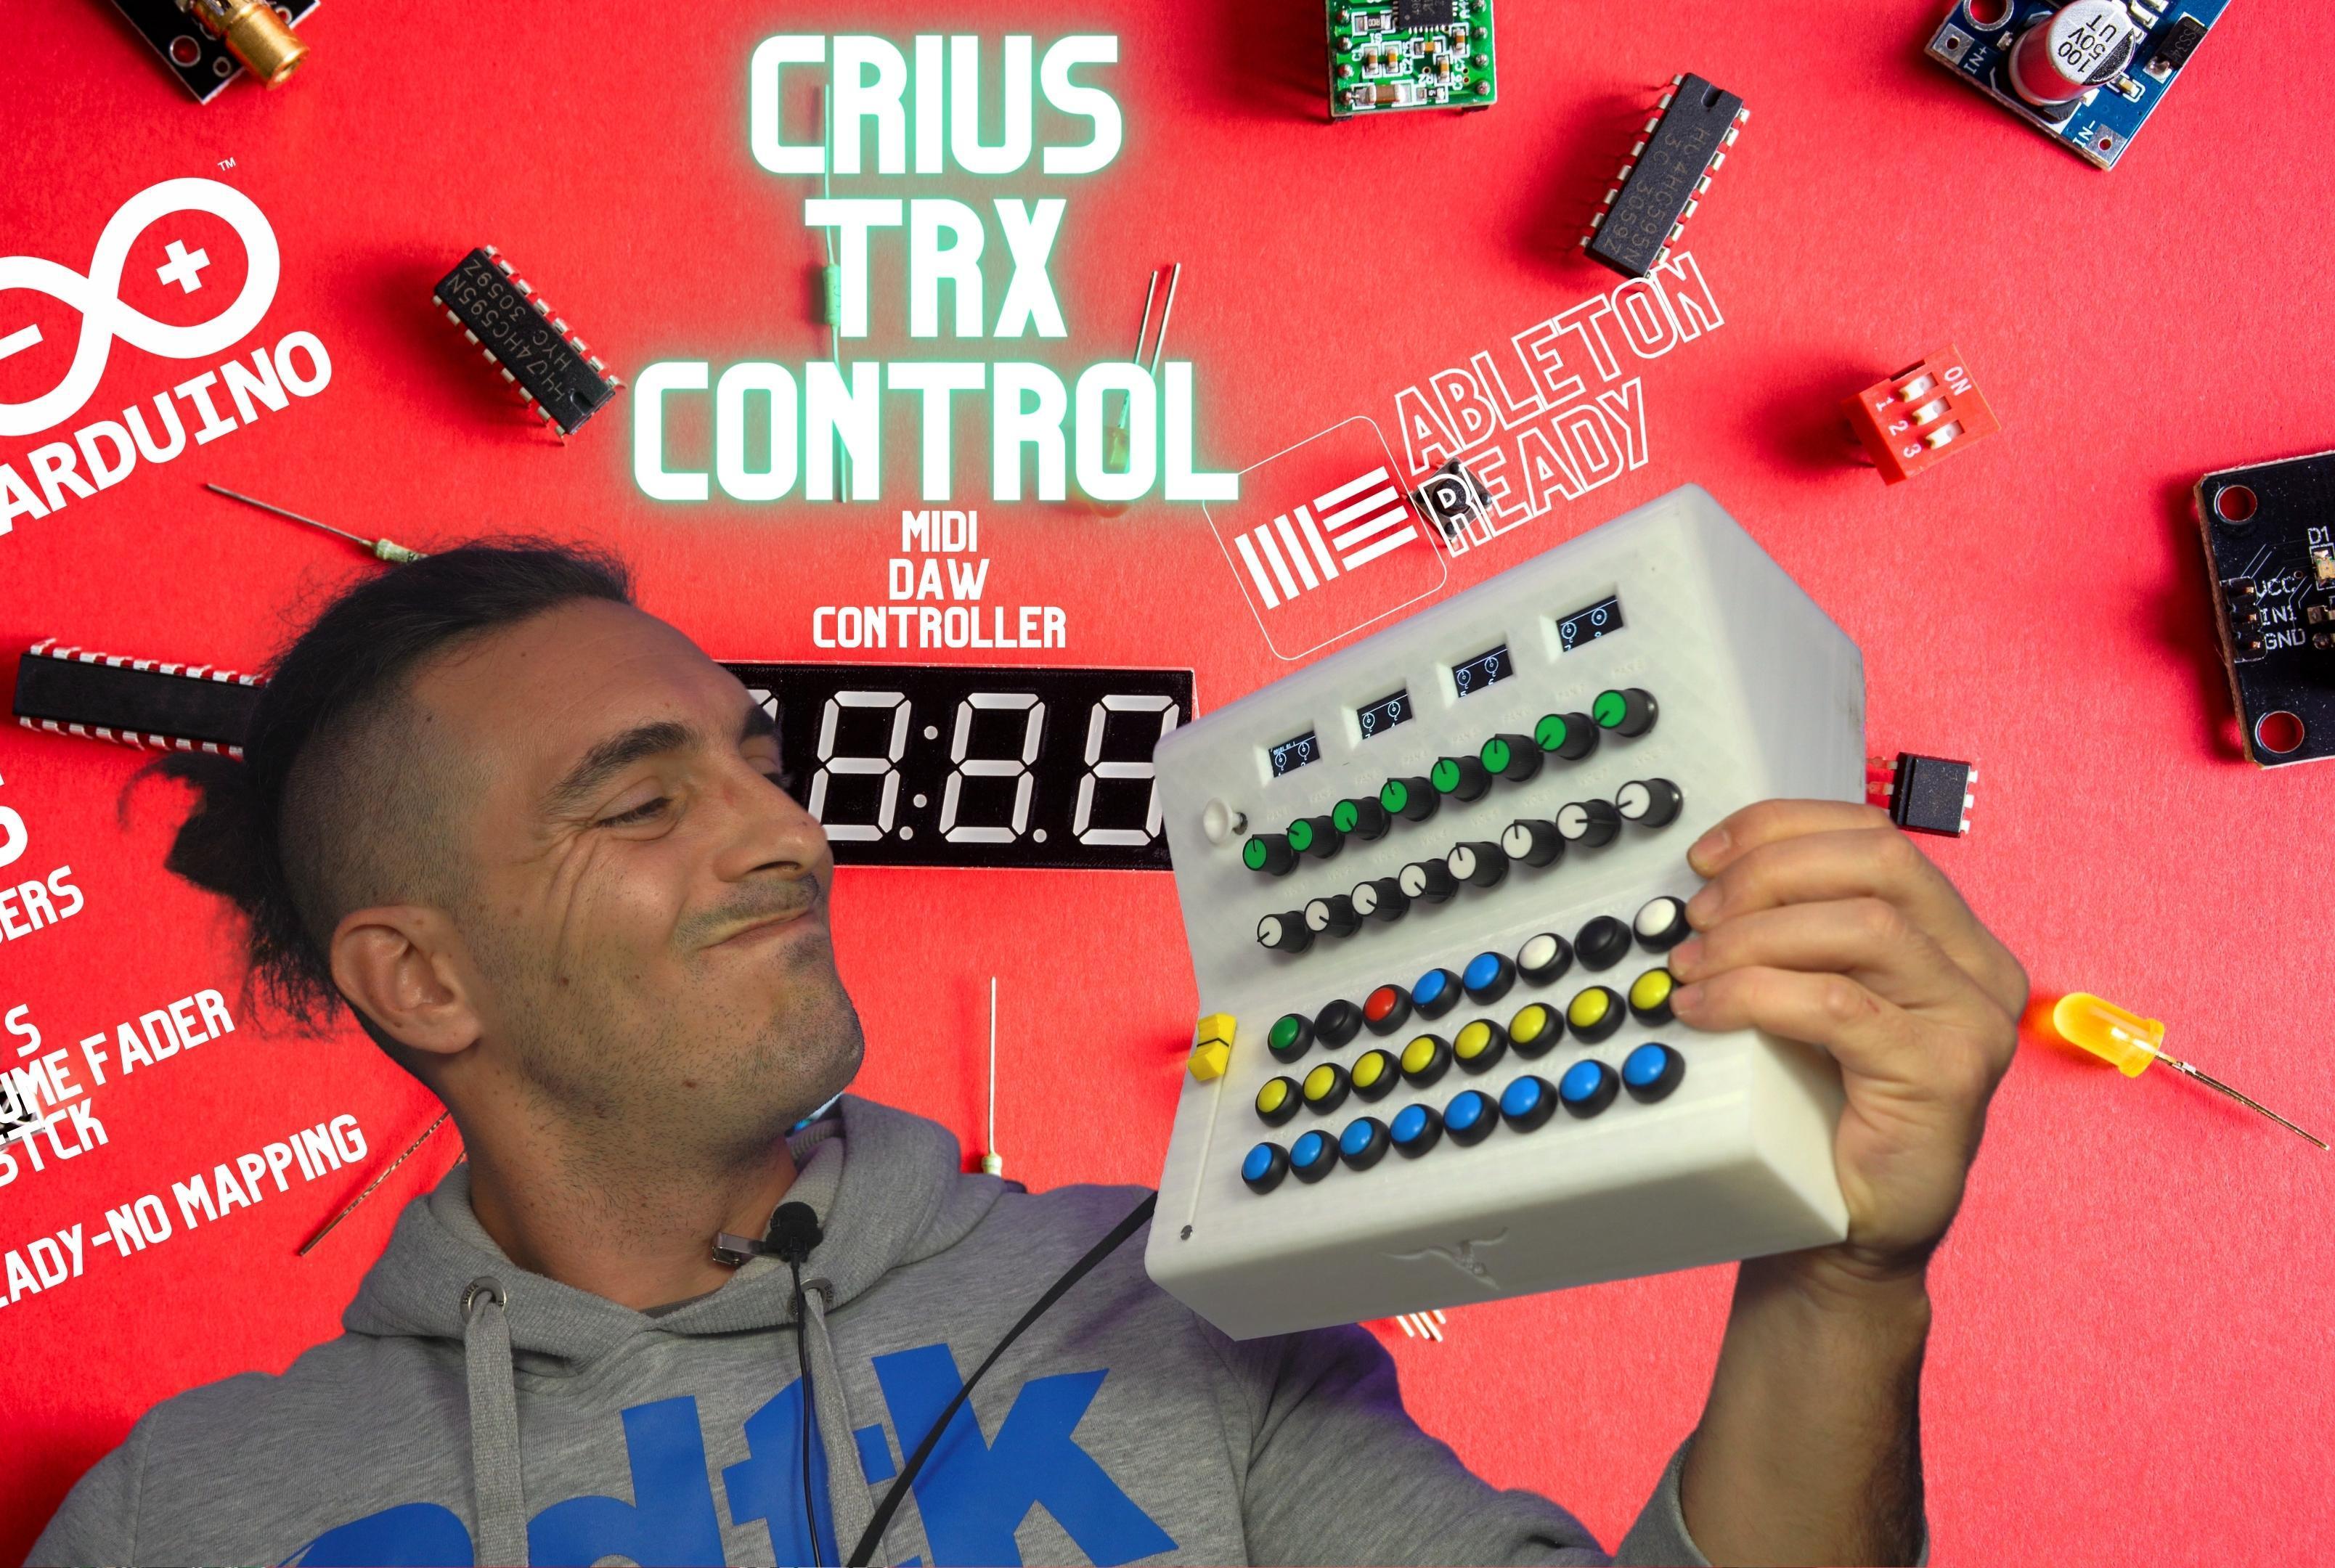 Arduino MIDI DAW Controller - Crius TRX Control V1.0